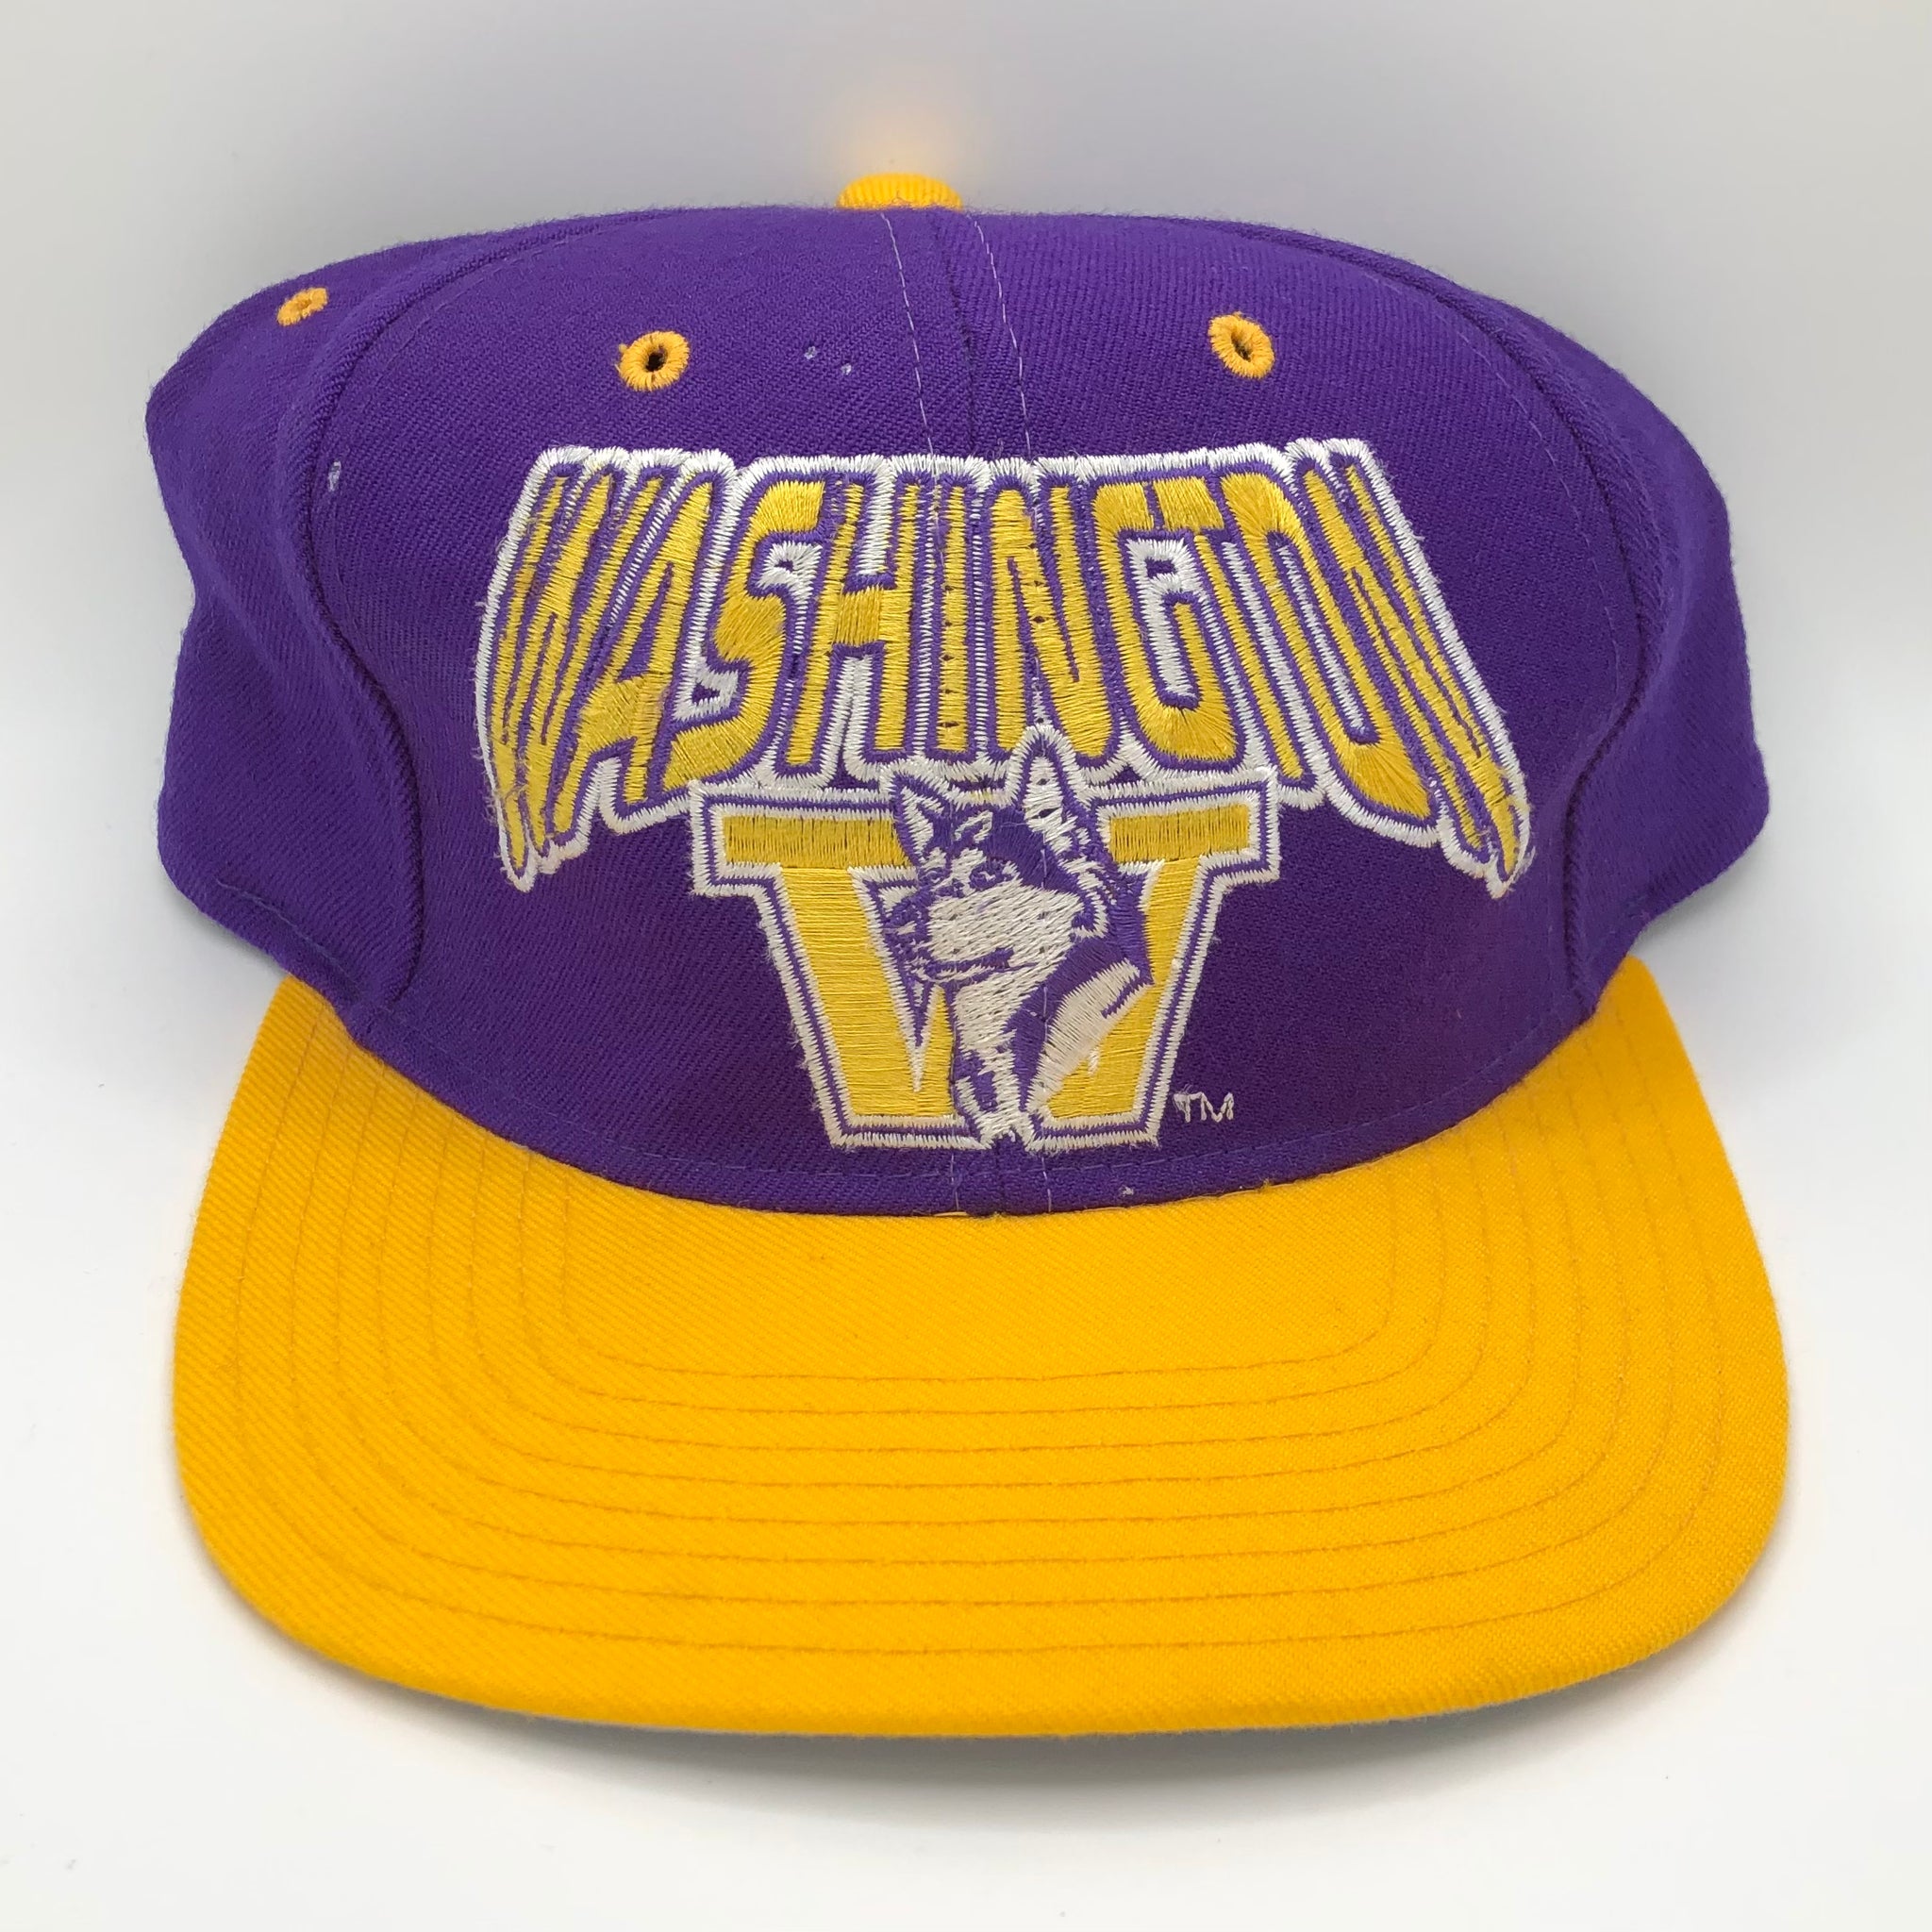 Vintage Washington Huskies Snapback Hat Starter